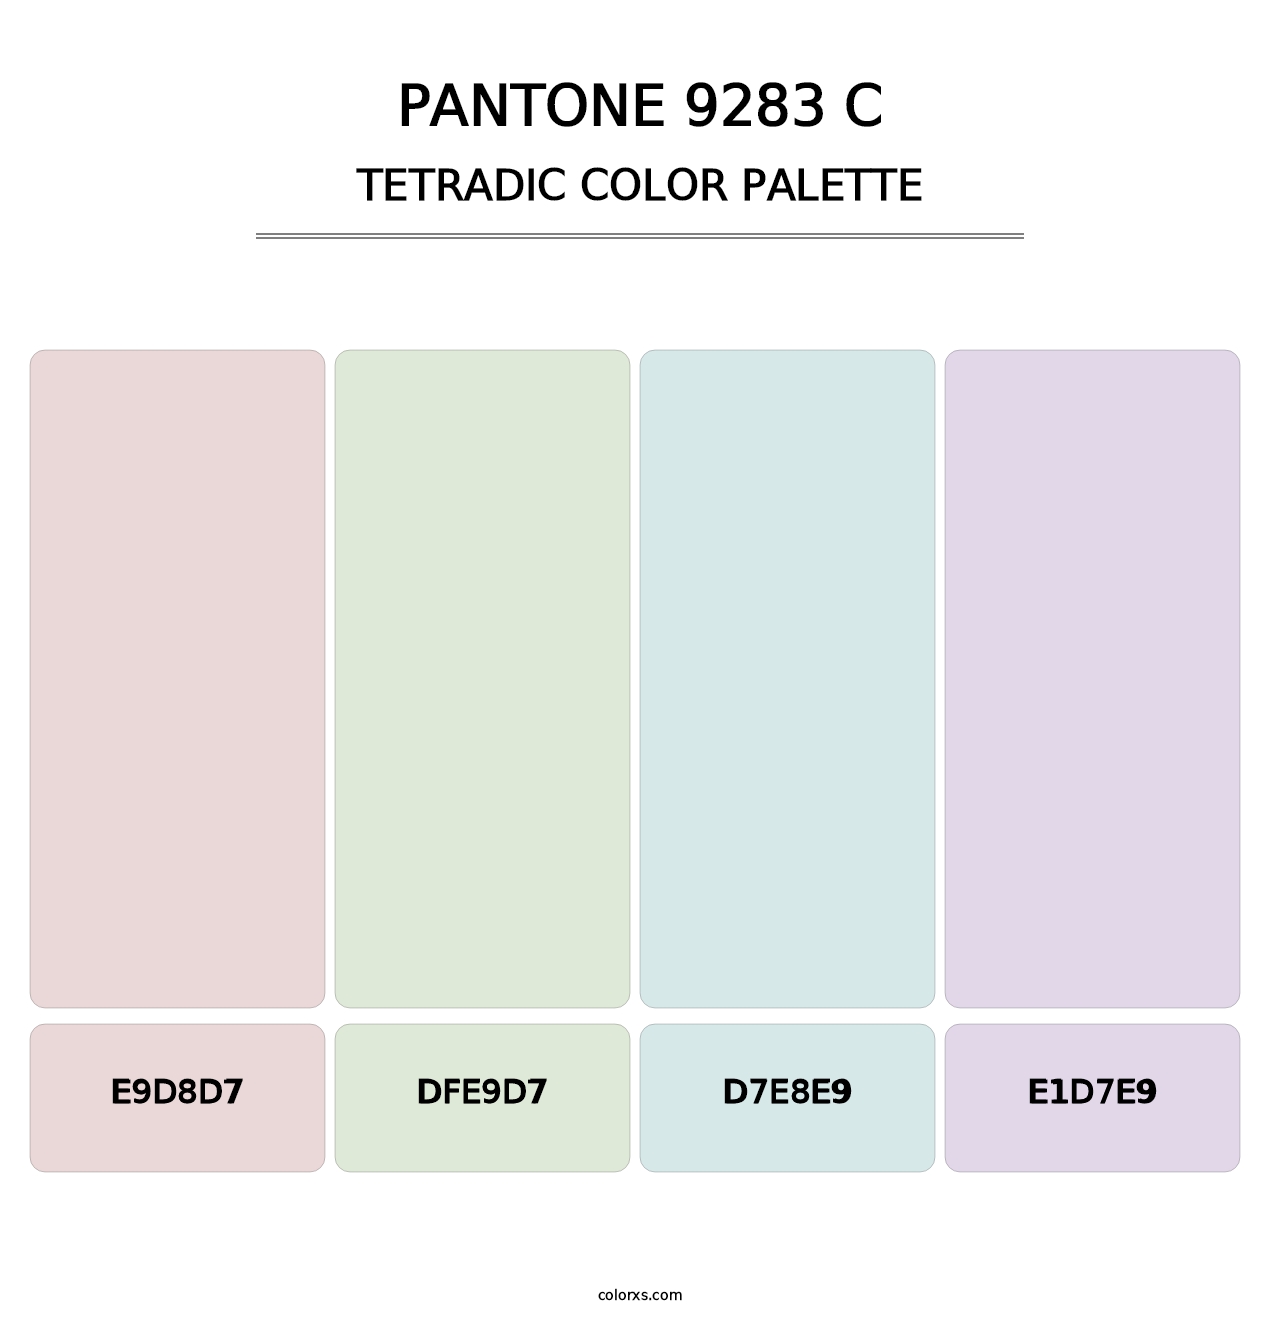 PANTONE 9283 C - Tetradic Color Palette